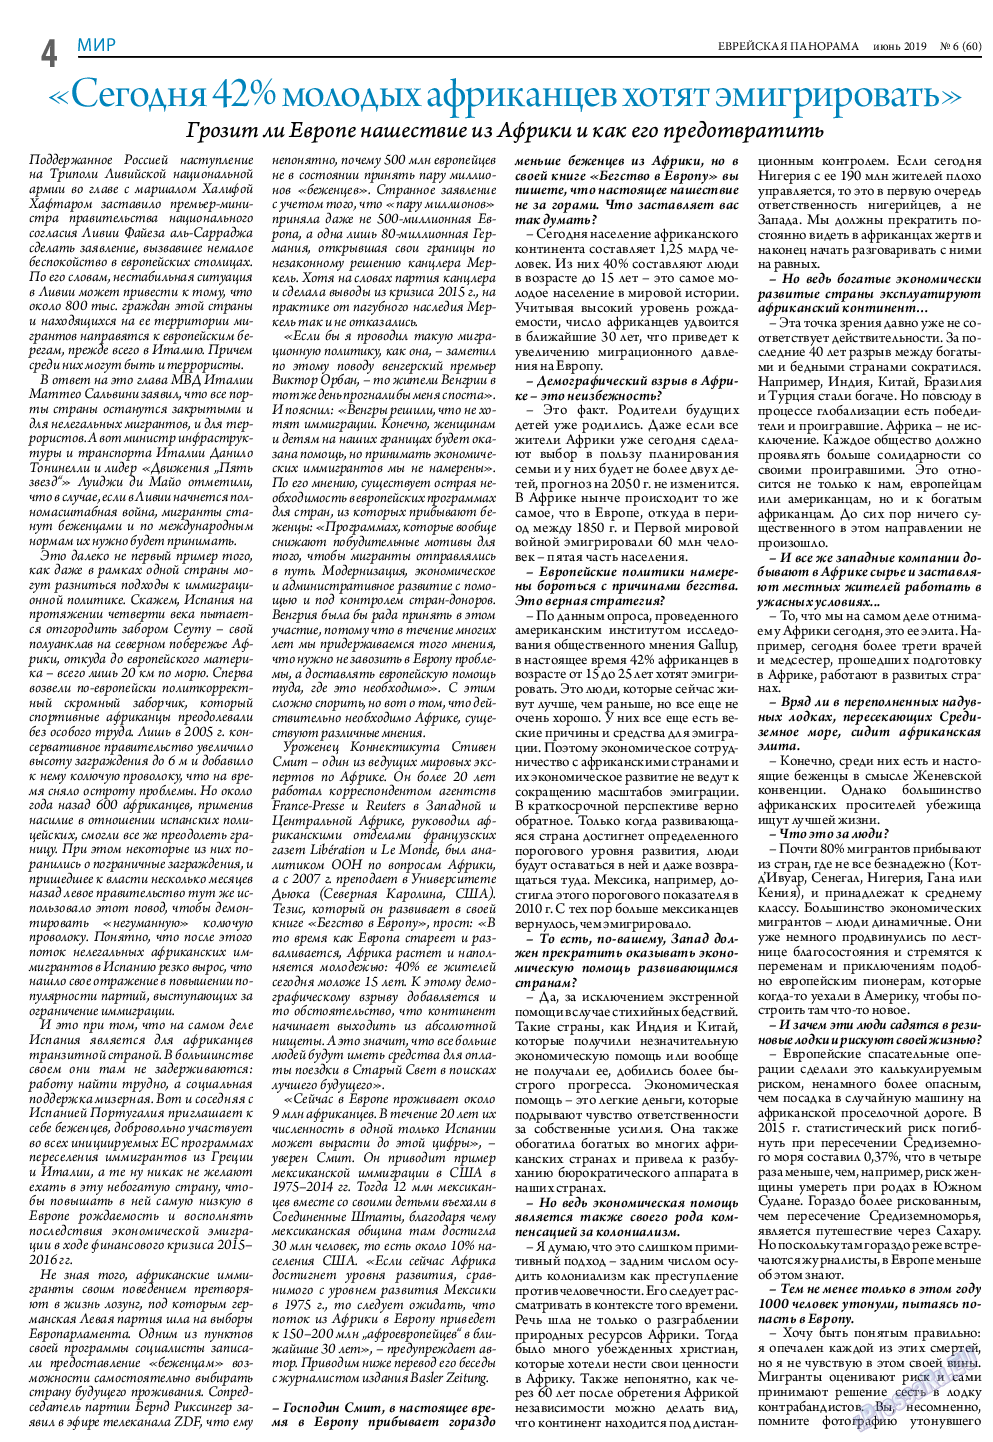 Еврейская панорама, газета. 2019 №6 стр.4